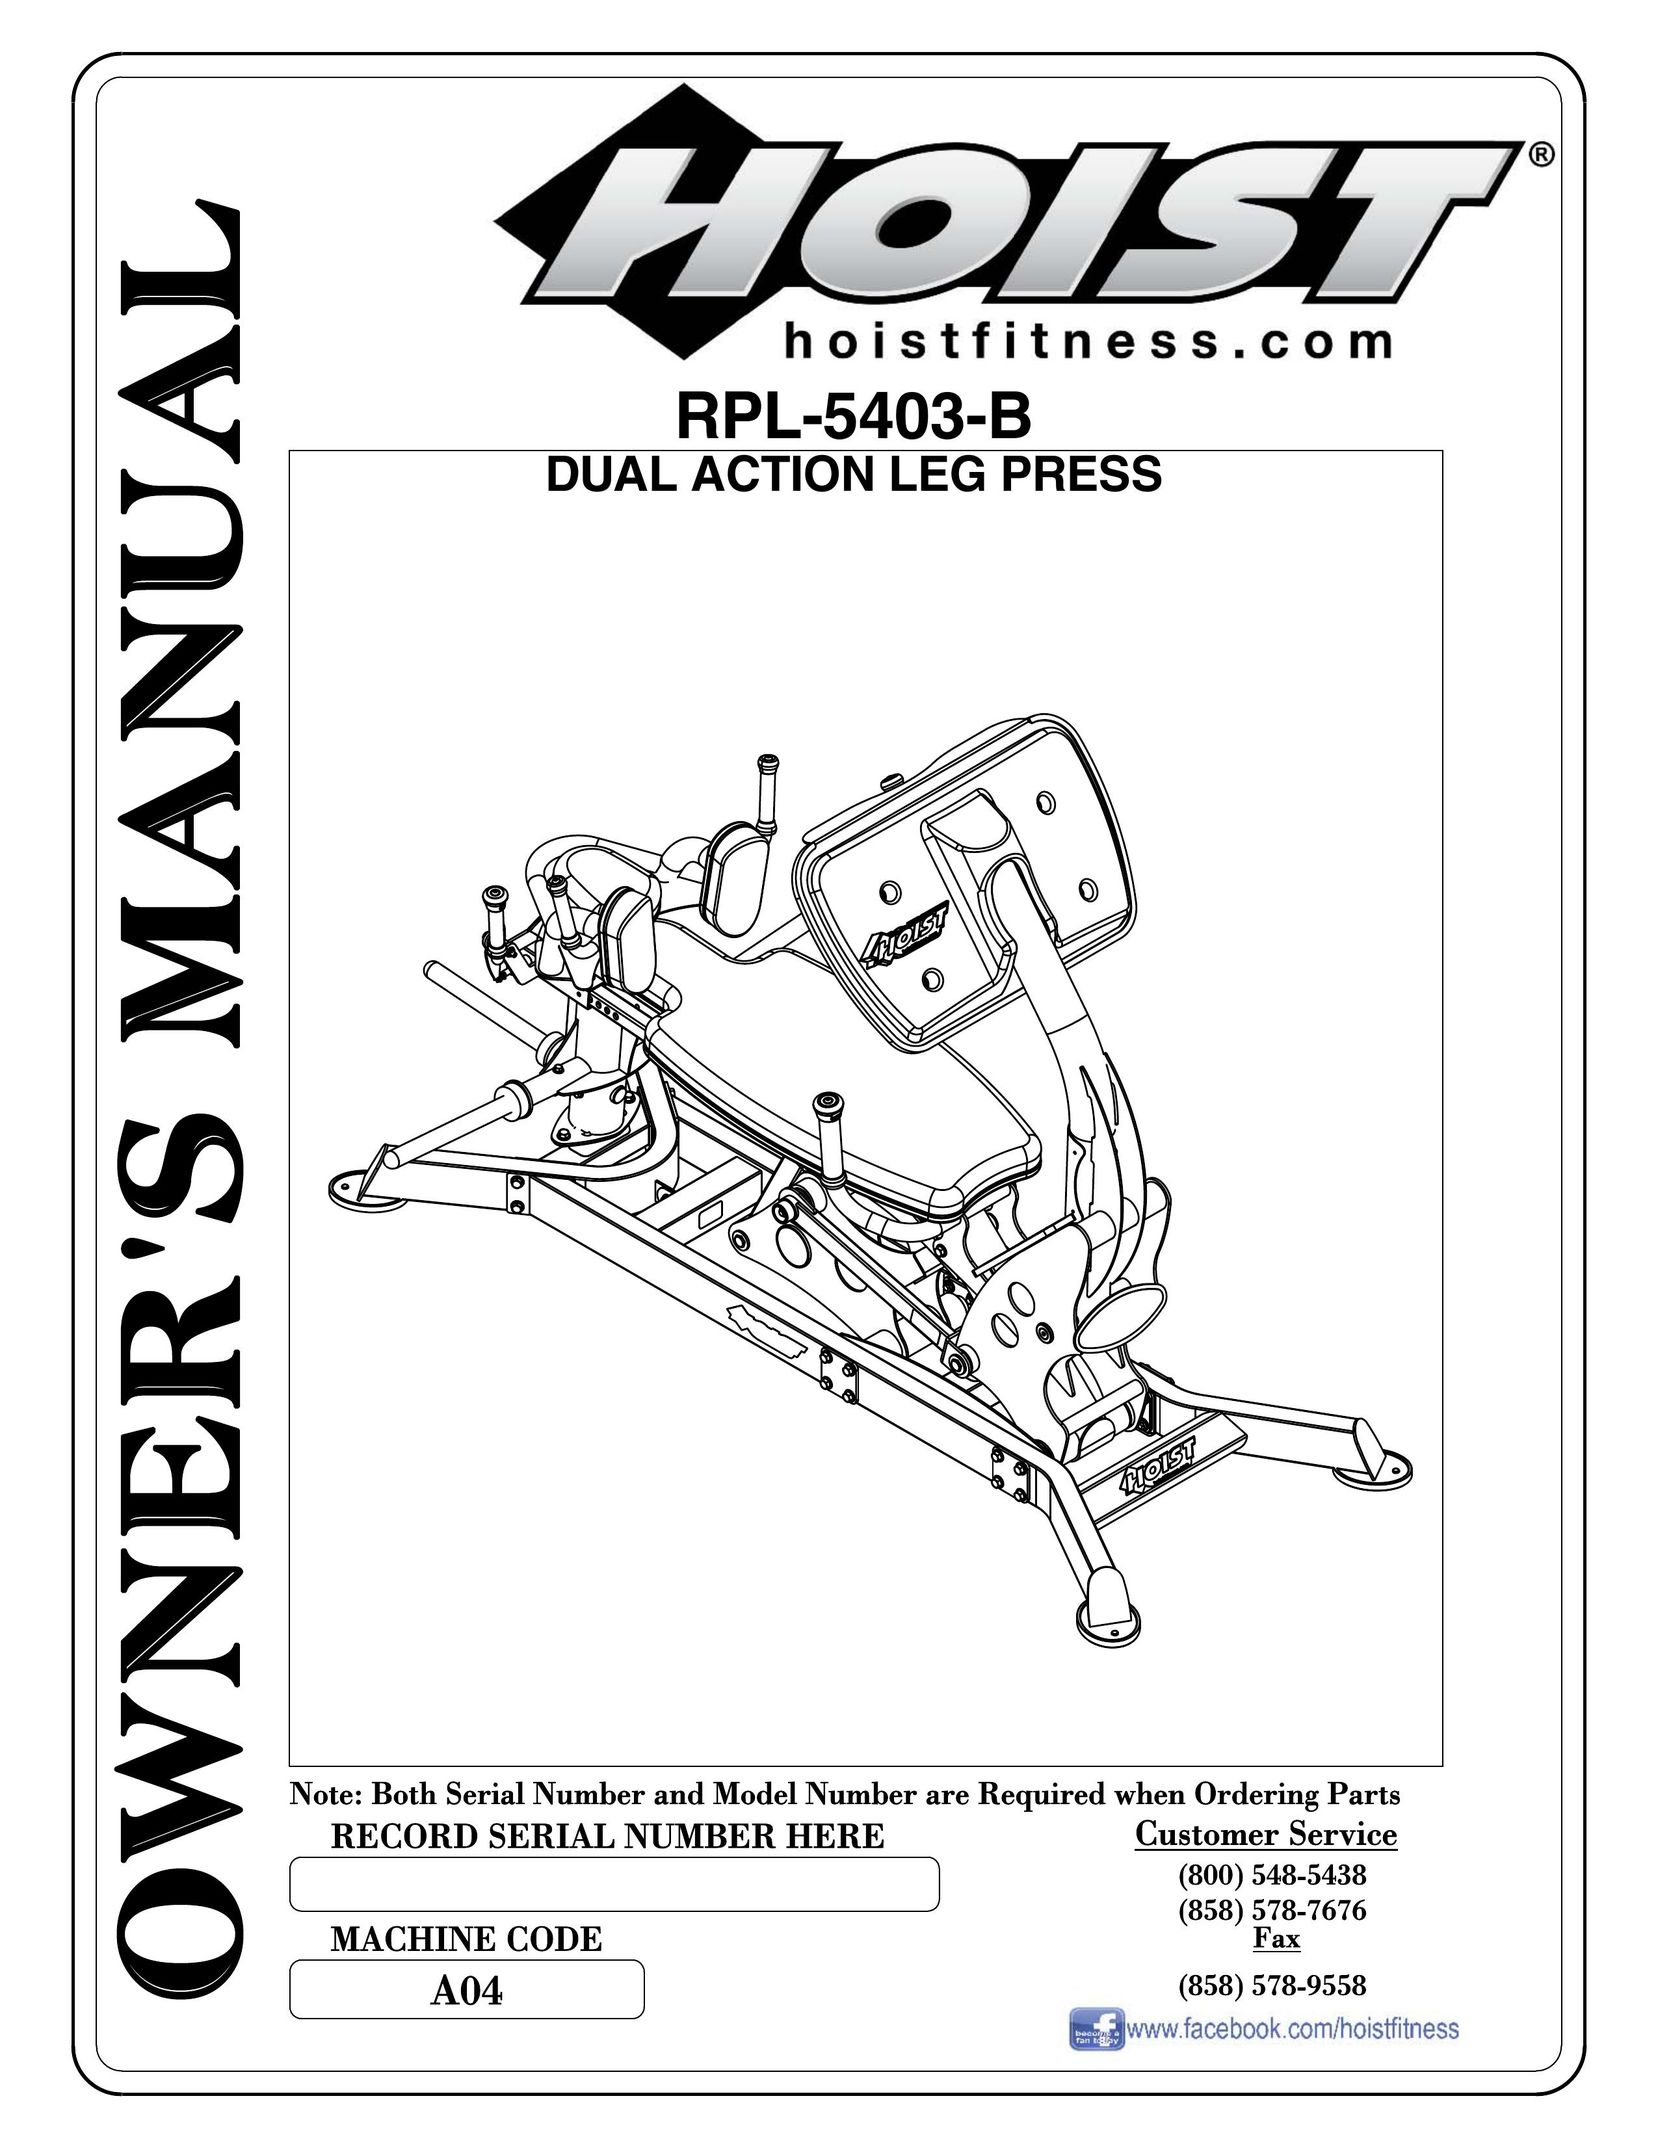 Hoist Fitness RPL-5406-B Baby Gym User Manual